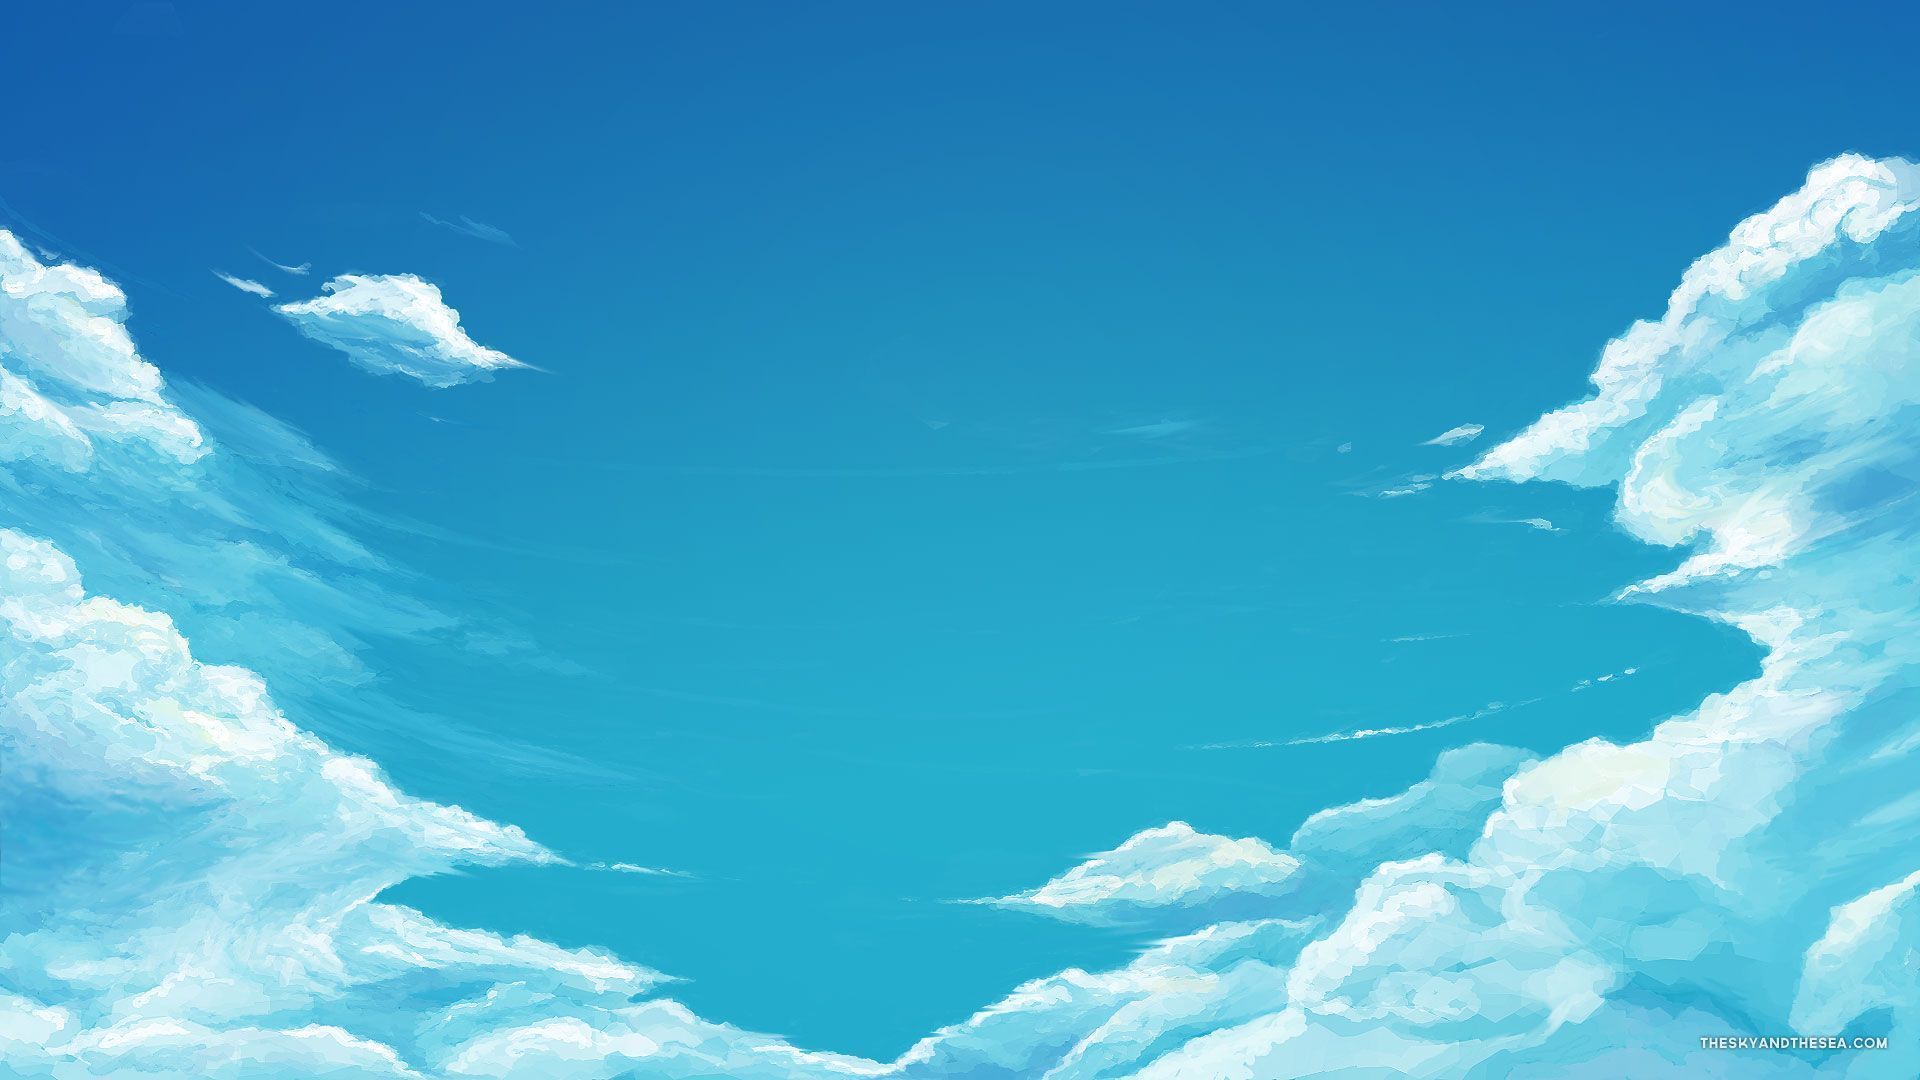 1080p HD Wallpaper. Sky and clouds, Sky anime, Blue sky wallpaper